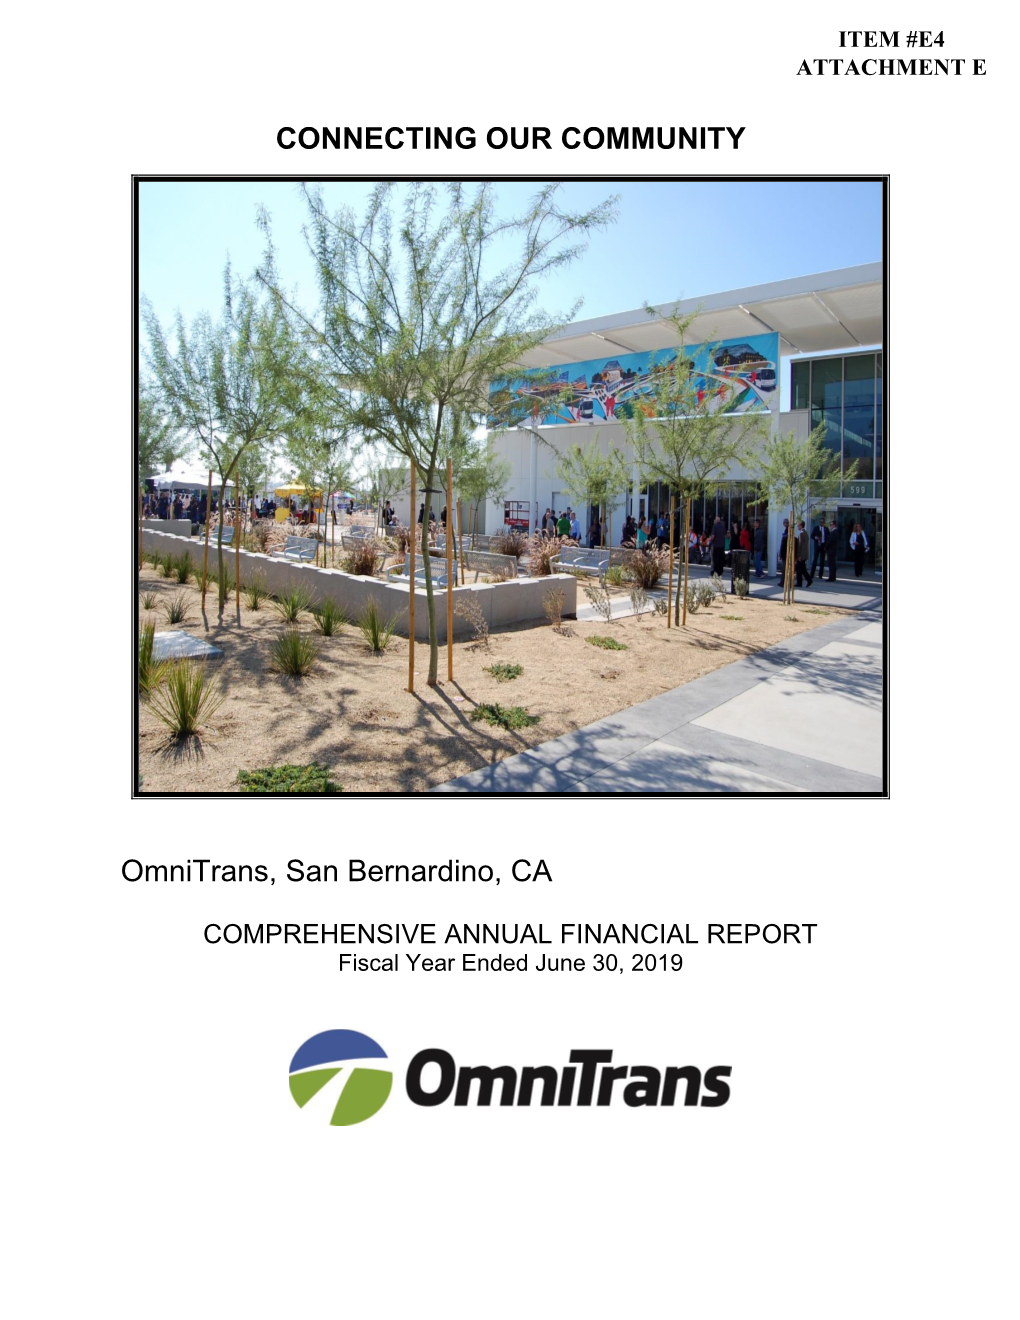 CONNECTING OUR COMMUNITY Omnitrans, San Bernardino, CA